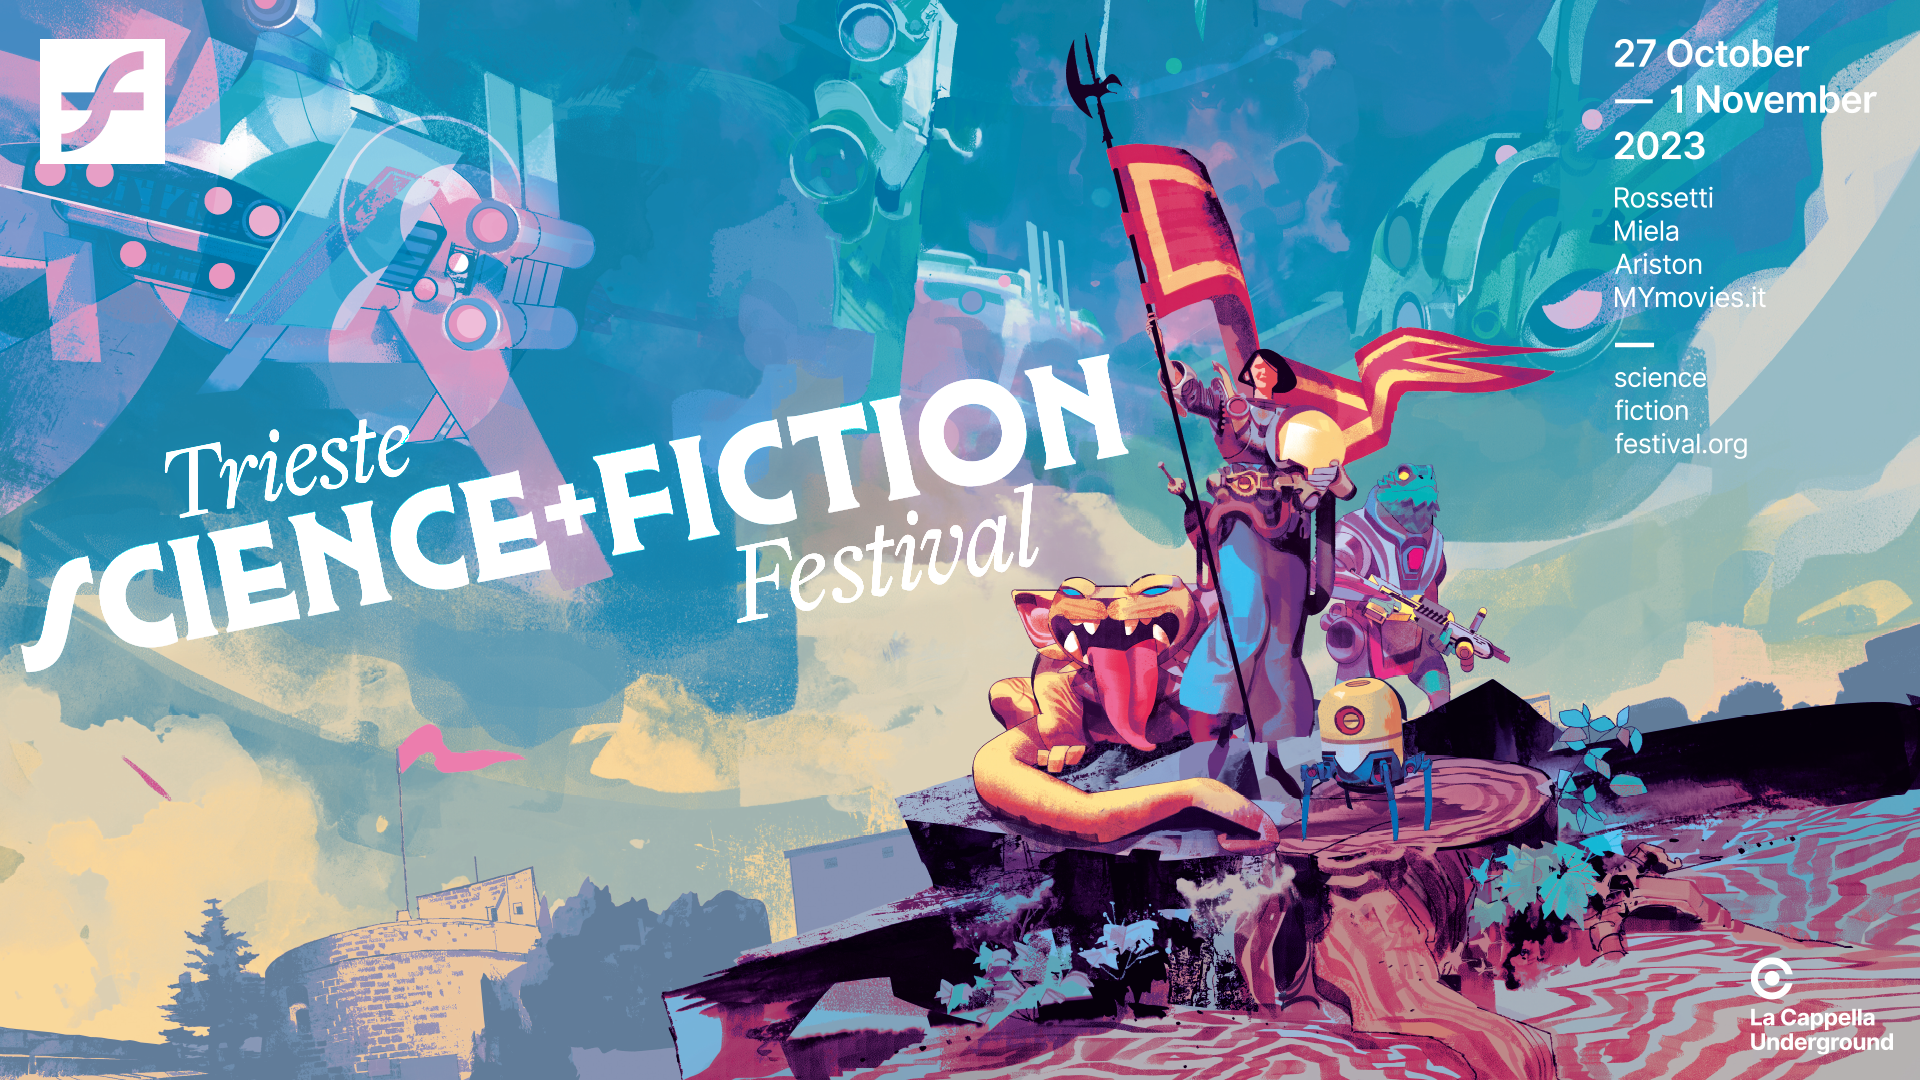 2023 Trieste Science+Fiction Festival - Trieste Science+Fiction Festival